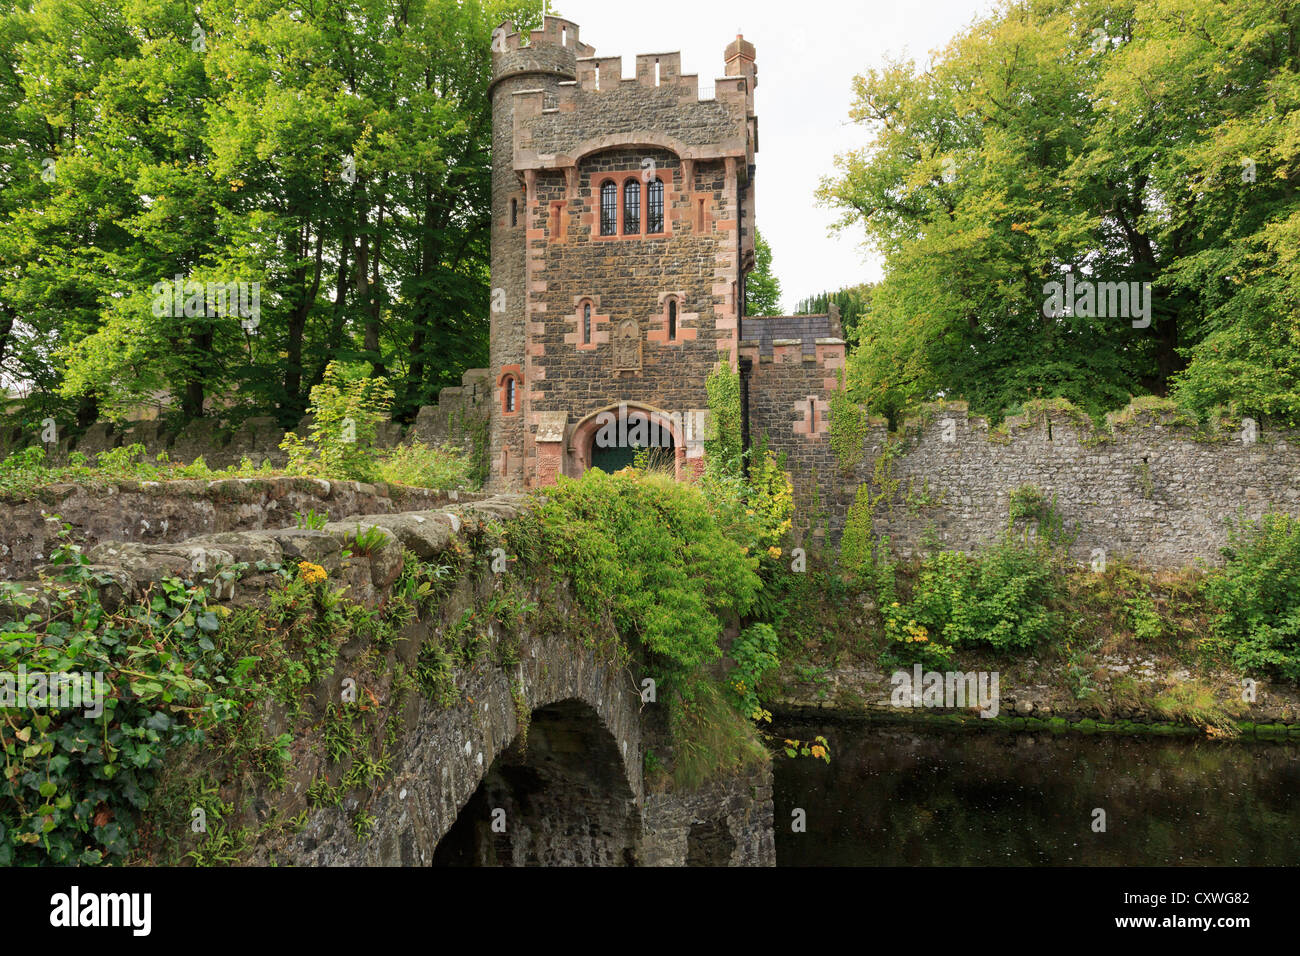 Bridge over Glenarm river to Barbican tower gate entrance to Glenarm Castle in Glenarm, County Antrim, Northern Ireland, UK, Britain Stock Photo